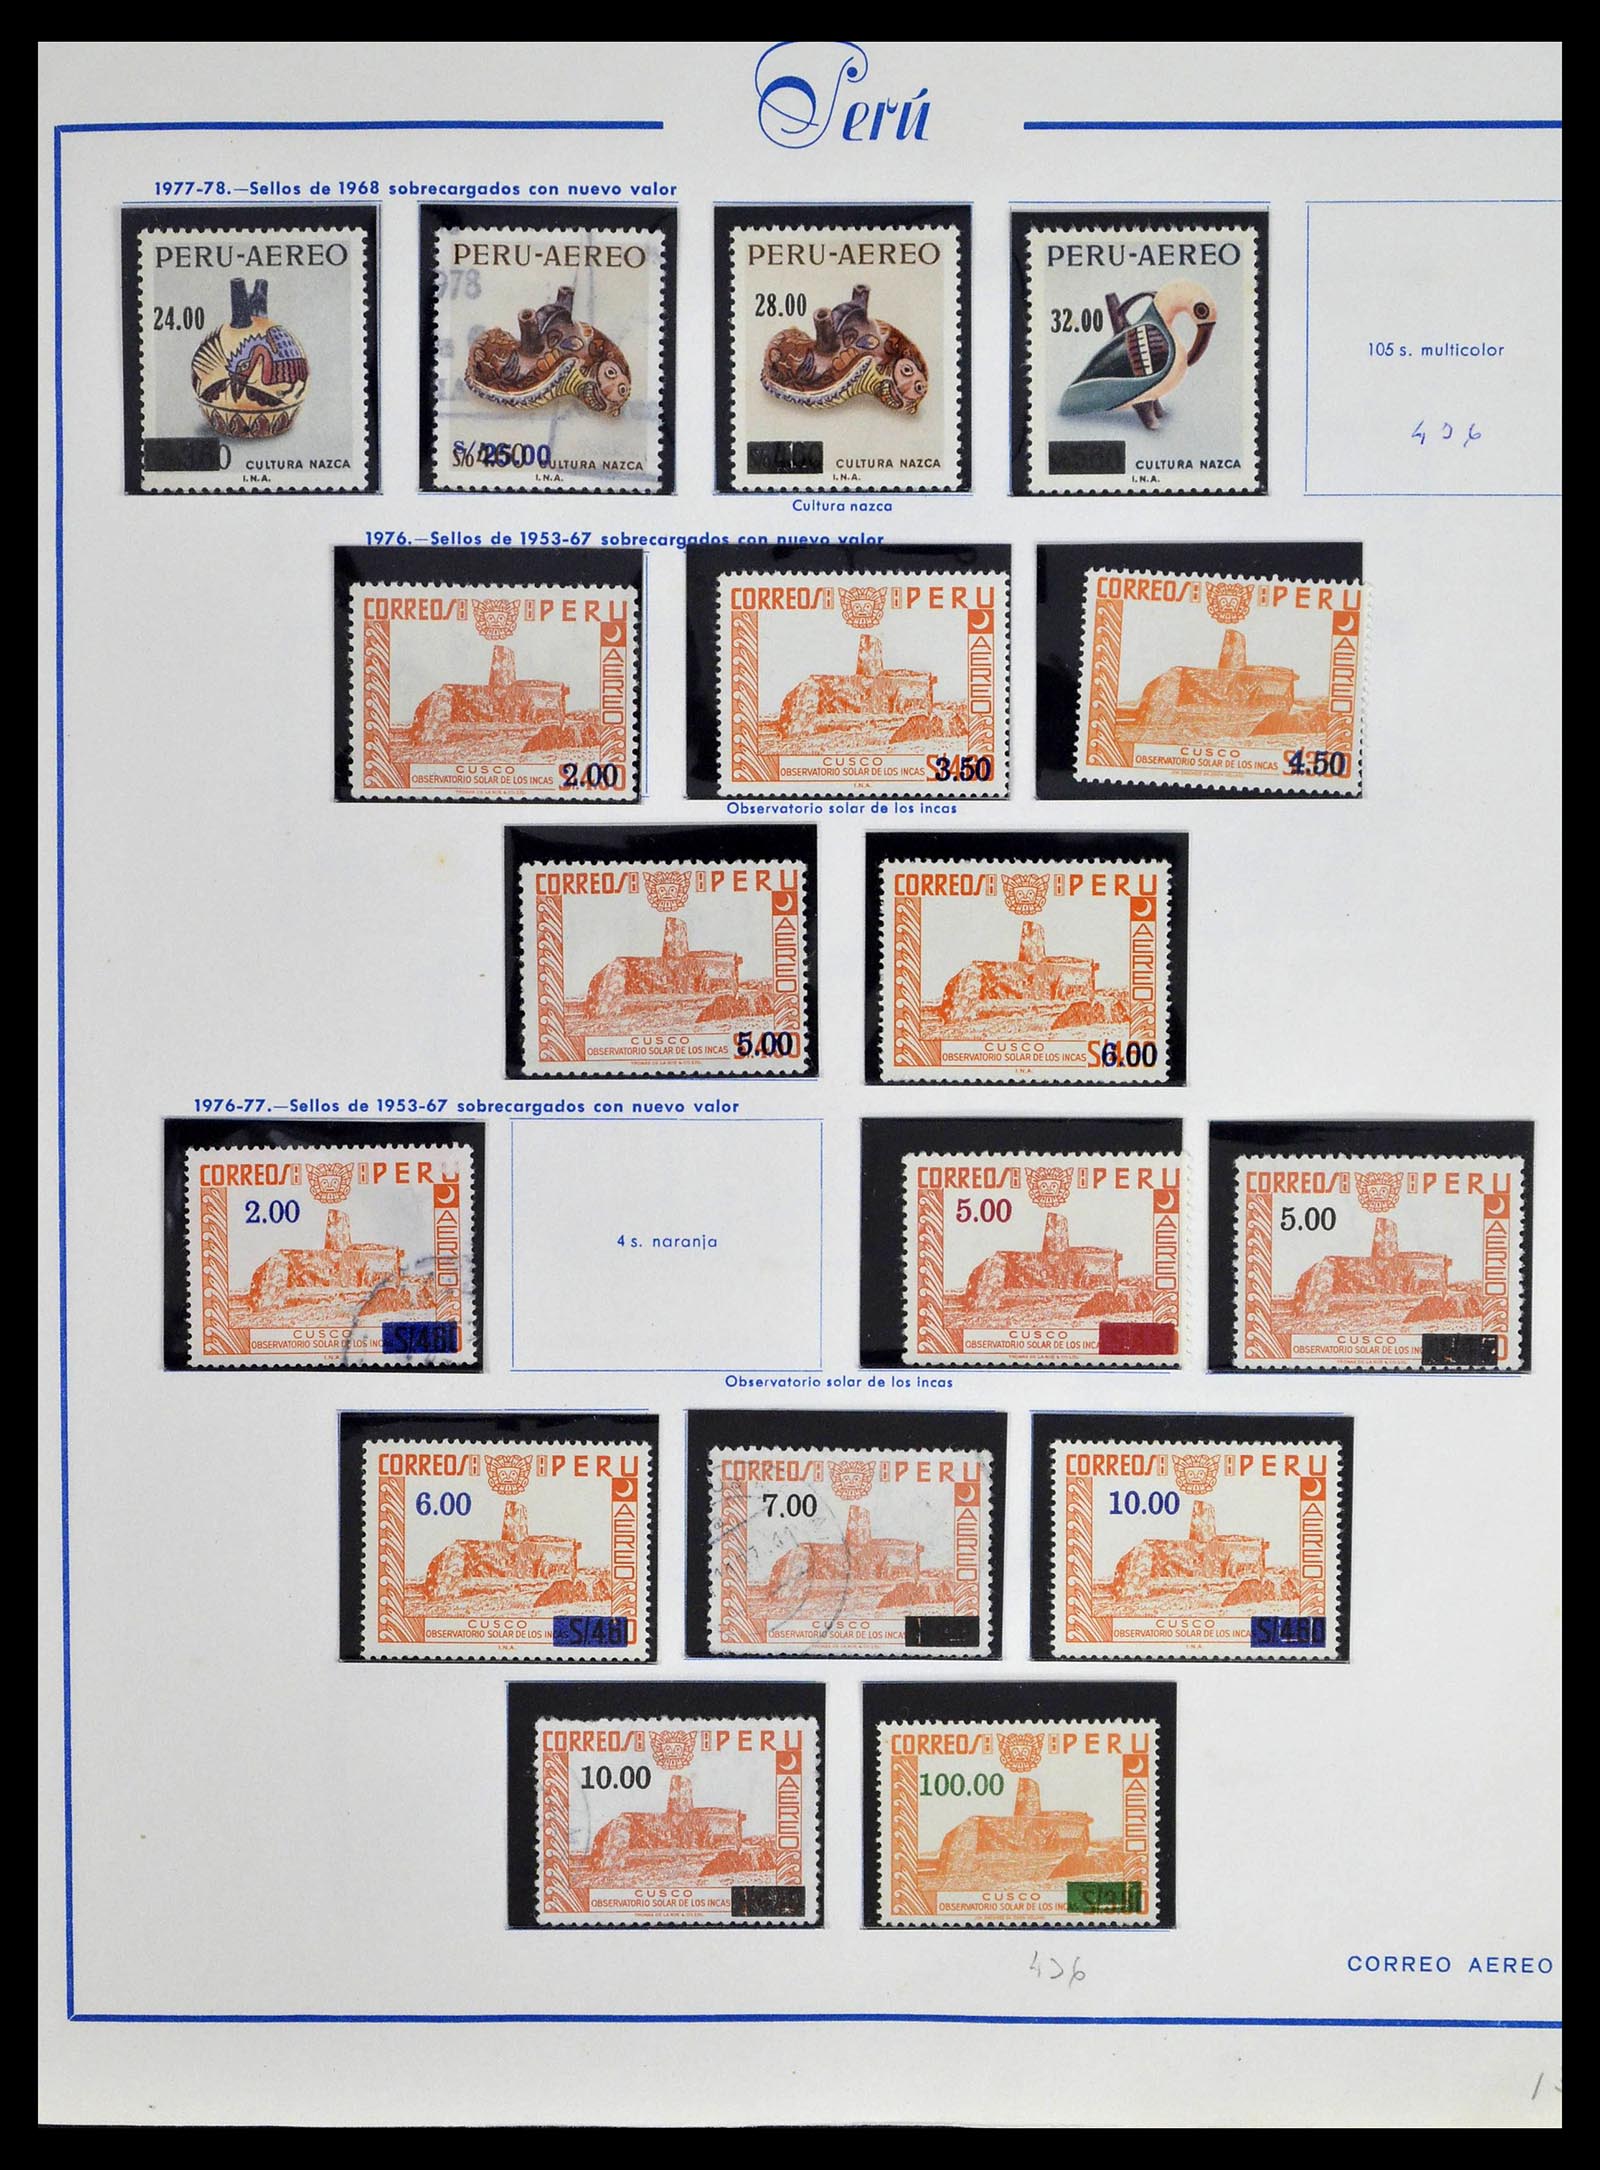 39214 0078 - Stamp collection 39214 Peru 1857-1981.